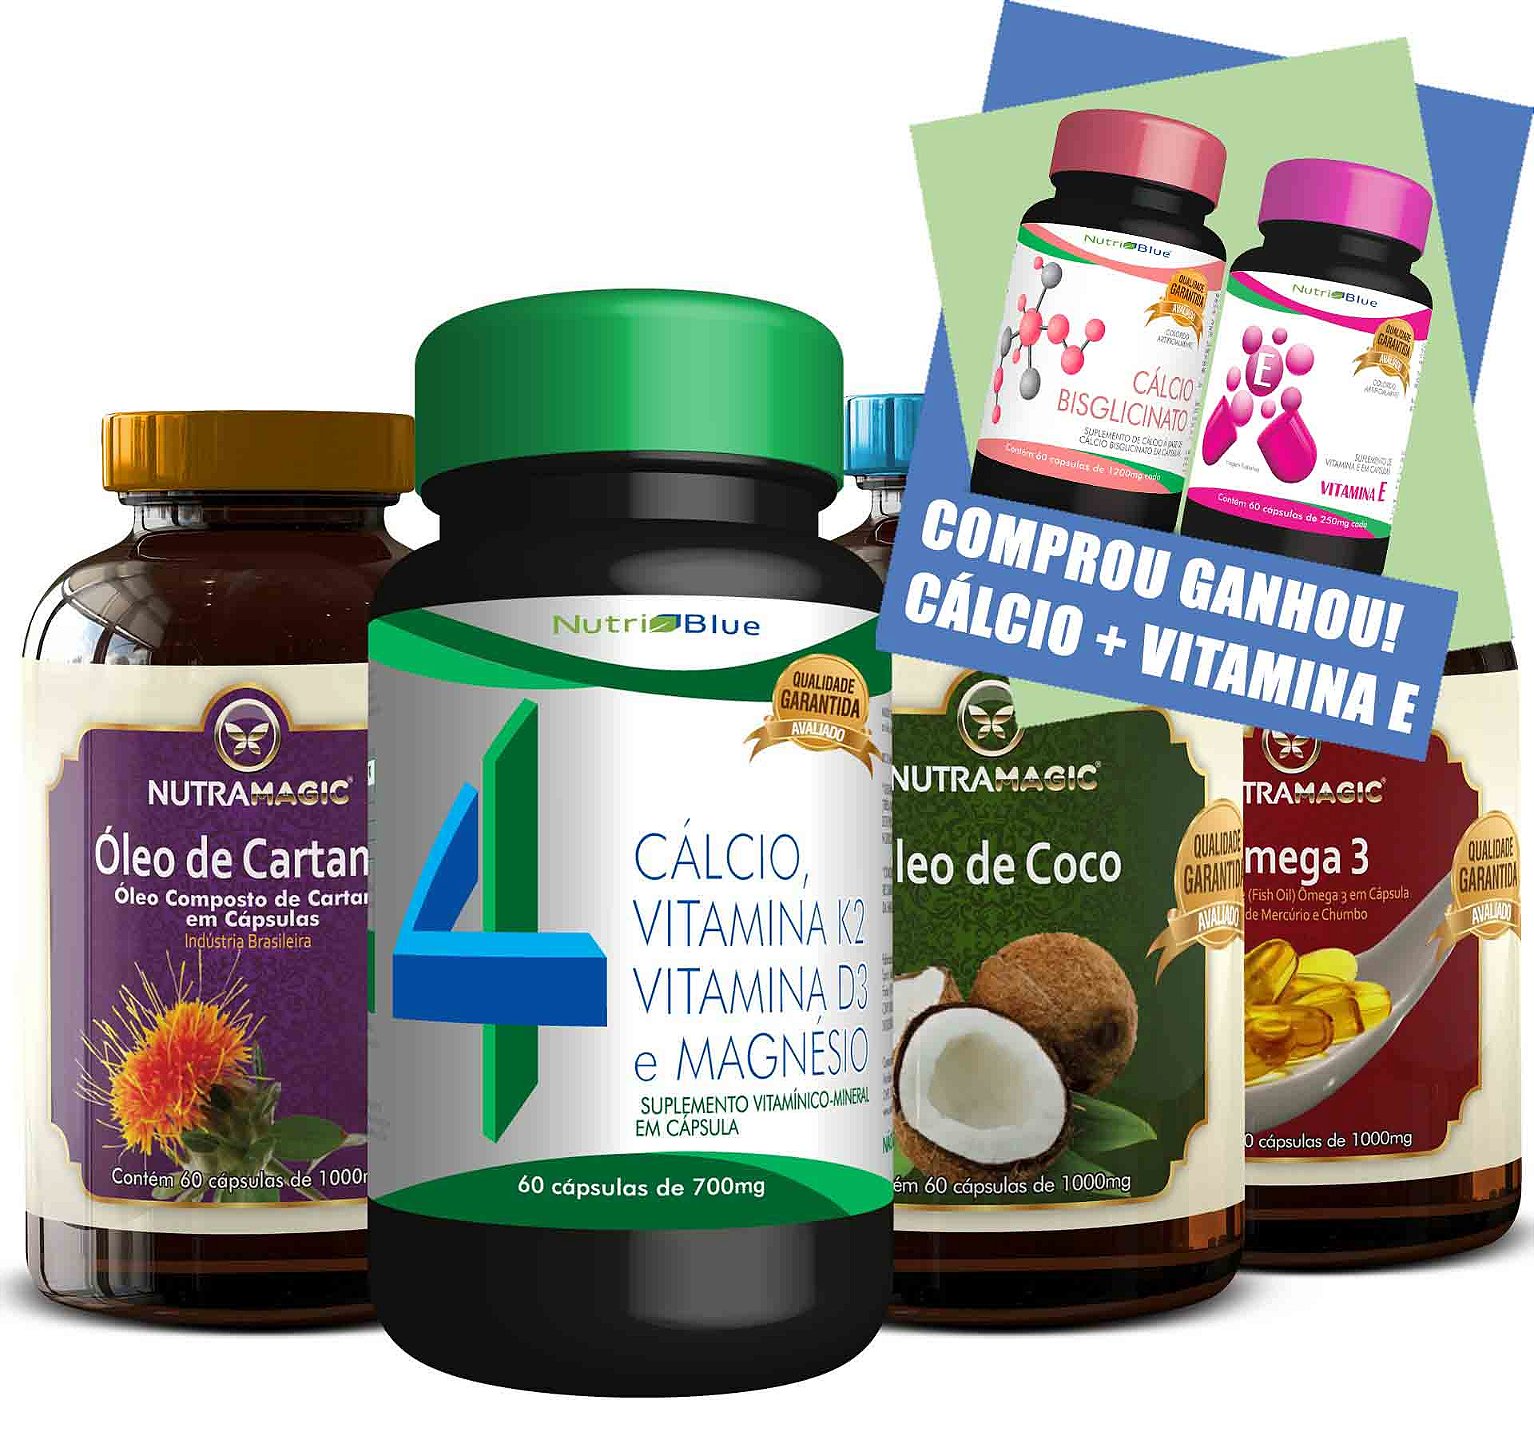 kit-familia-stay-well-6meses-nutriblue-calcio-vitaminak2-vitaminad3